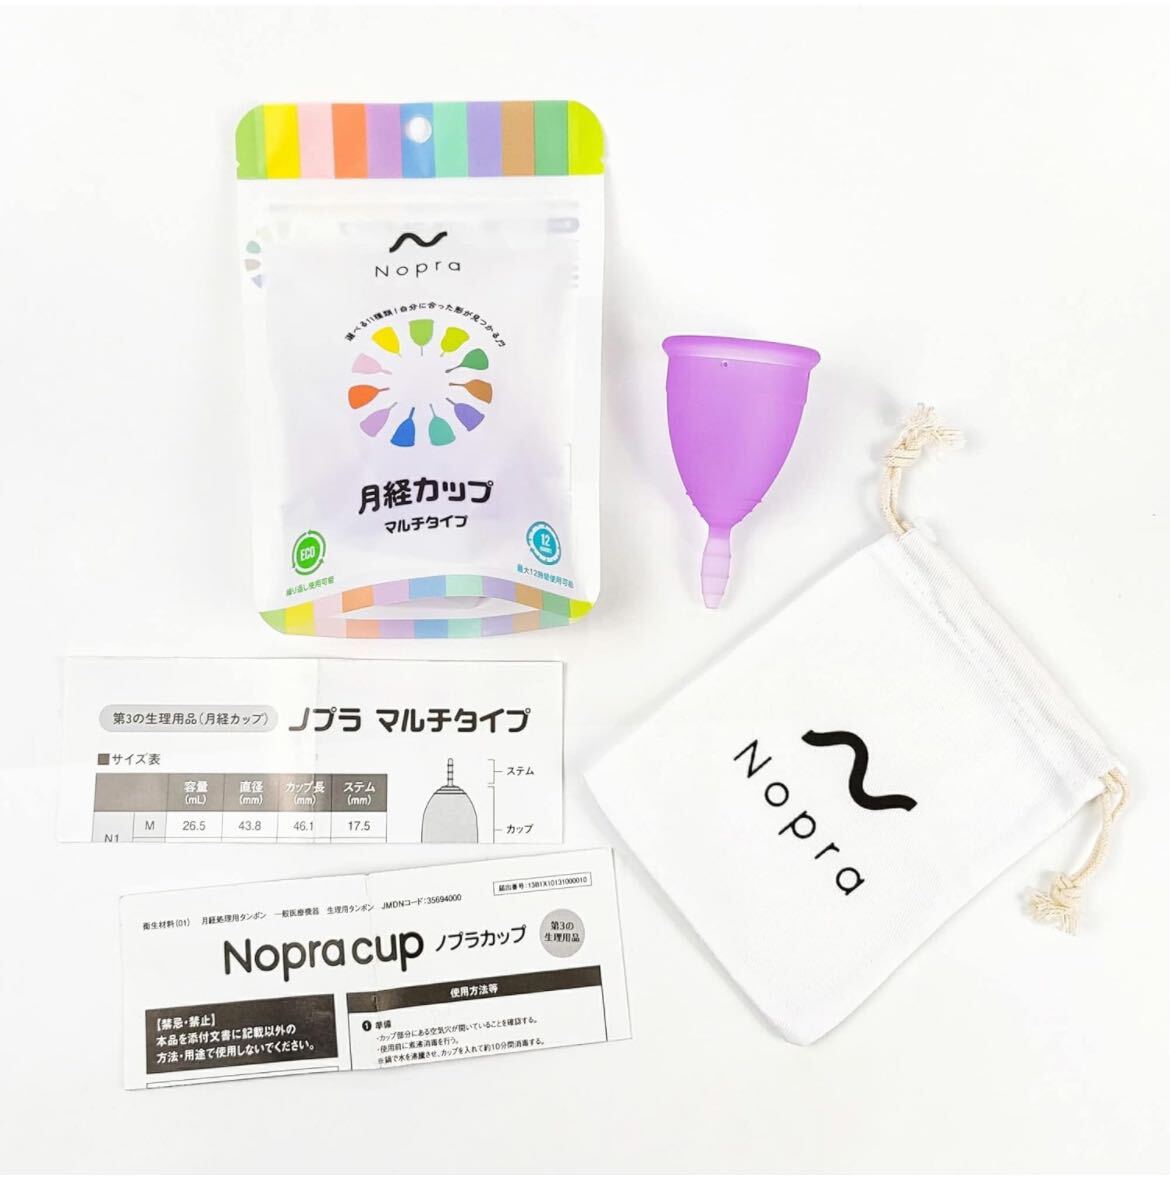 605p2414☆ Nopra Cup ノプラカップ 月経カップ マルチタイプ 経血カップ 生理カップ menstrual cup (N3, Mサイズ)